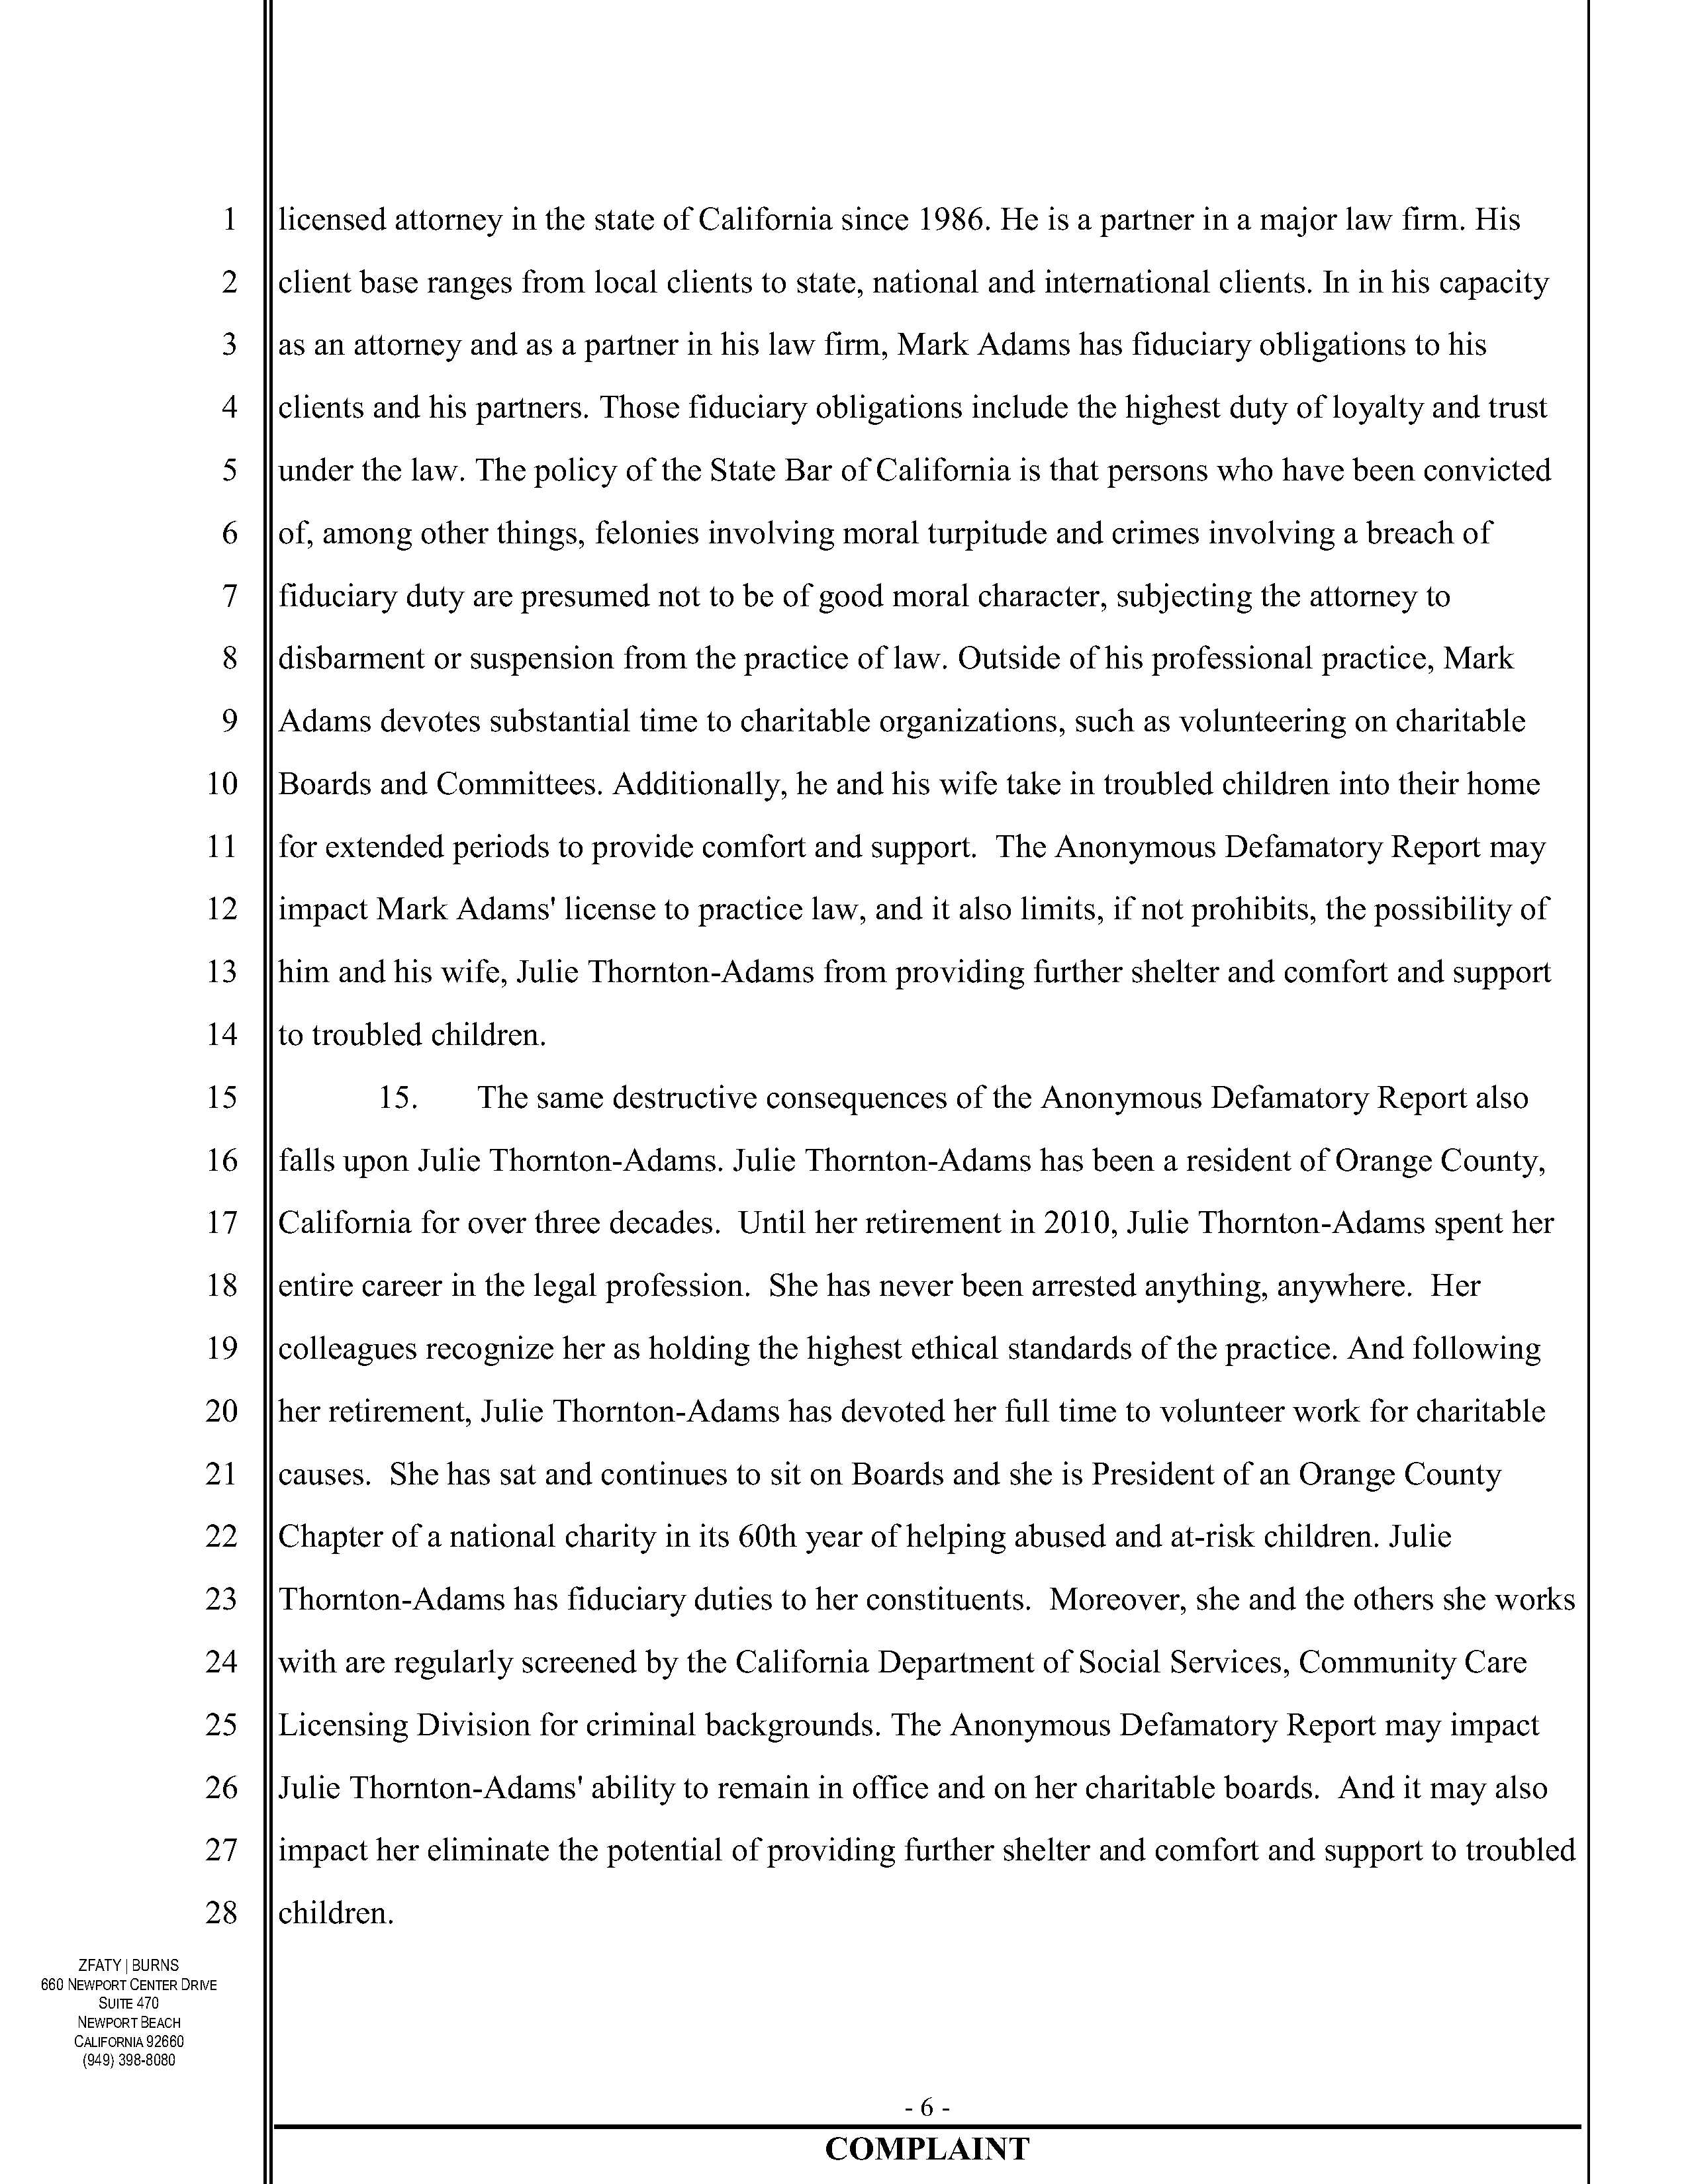 Court Conformed Copy of Complaint, page 7